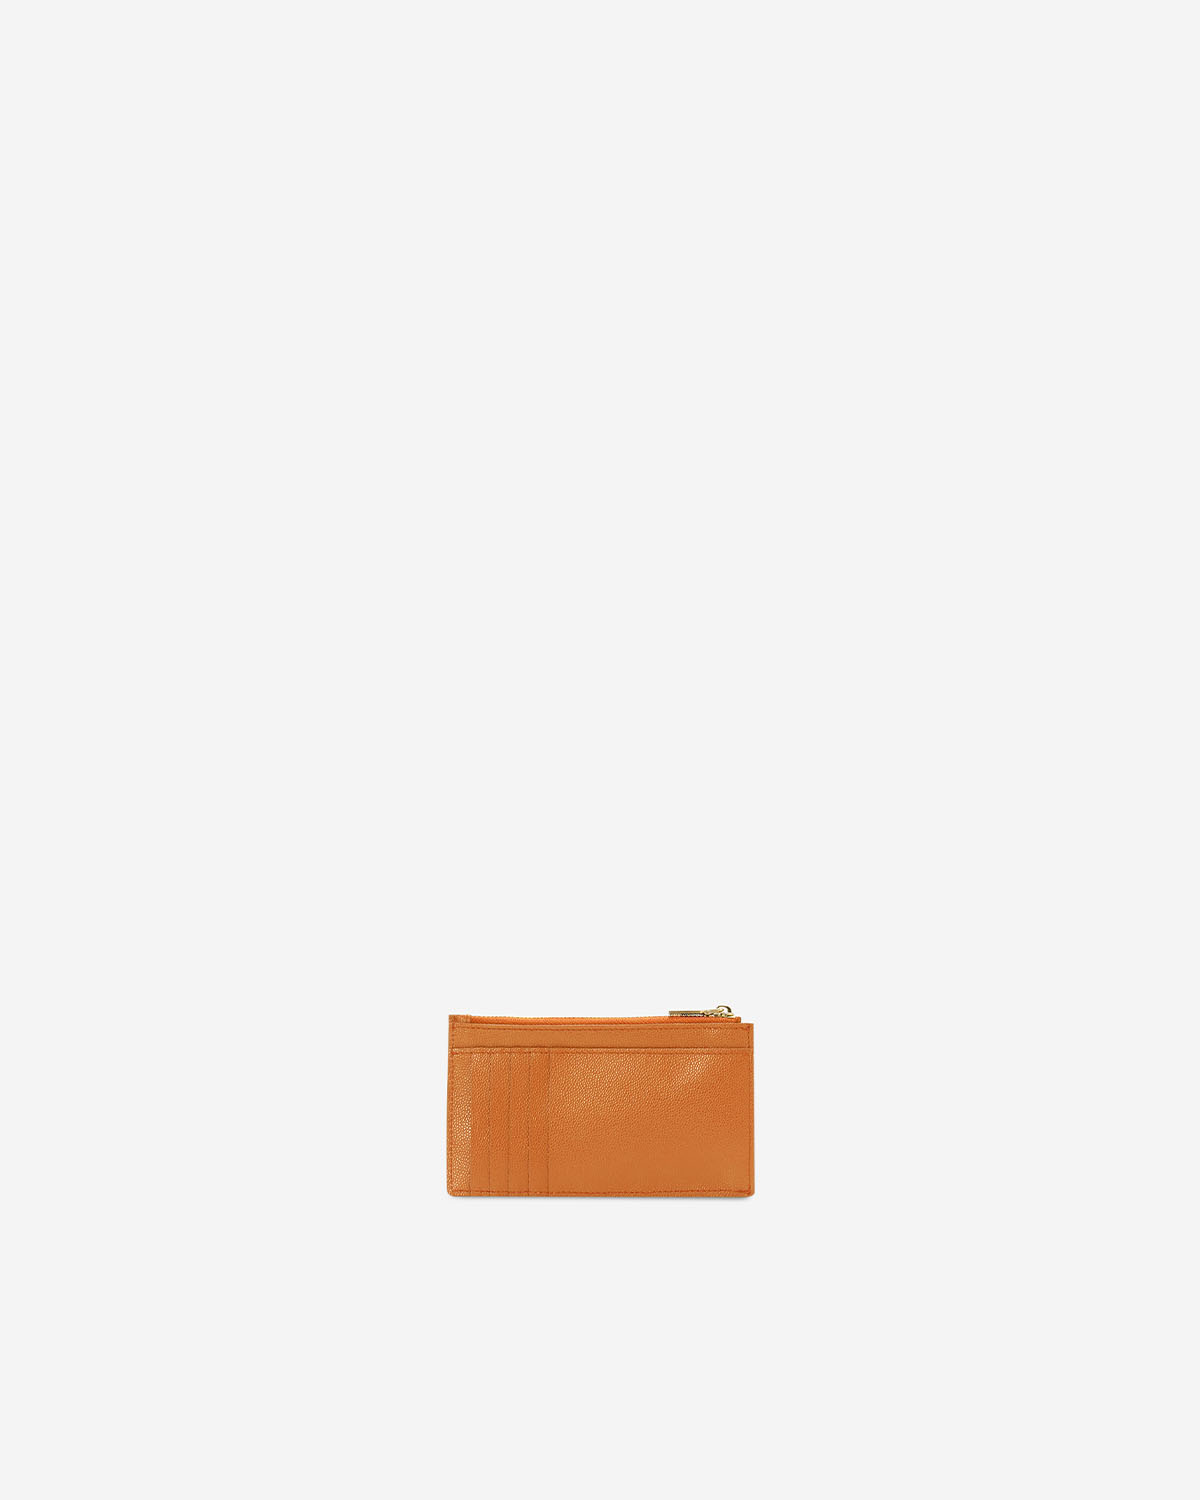 VERA CAVIAR Long Card Holder in Orange H กระเป๋าใส่บัตรทรงยาว ทำจากหนังแท้ลาย Caviar สี Orange H